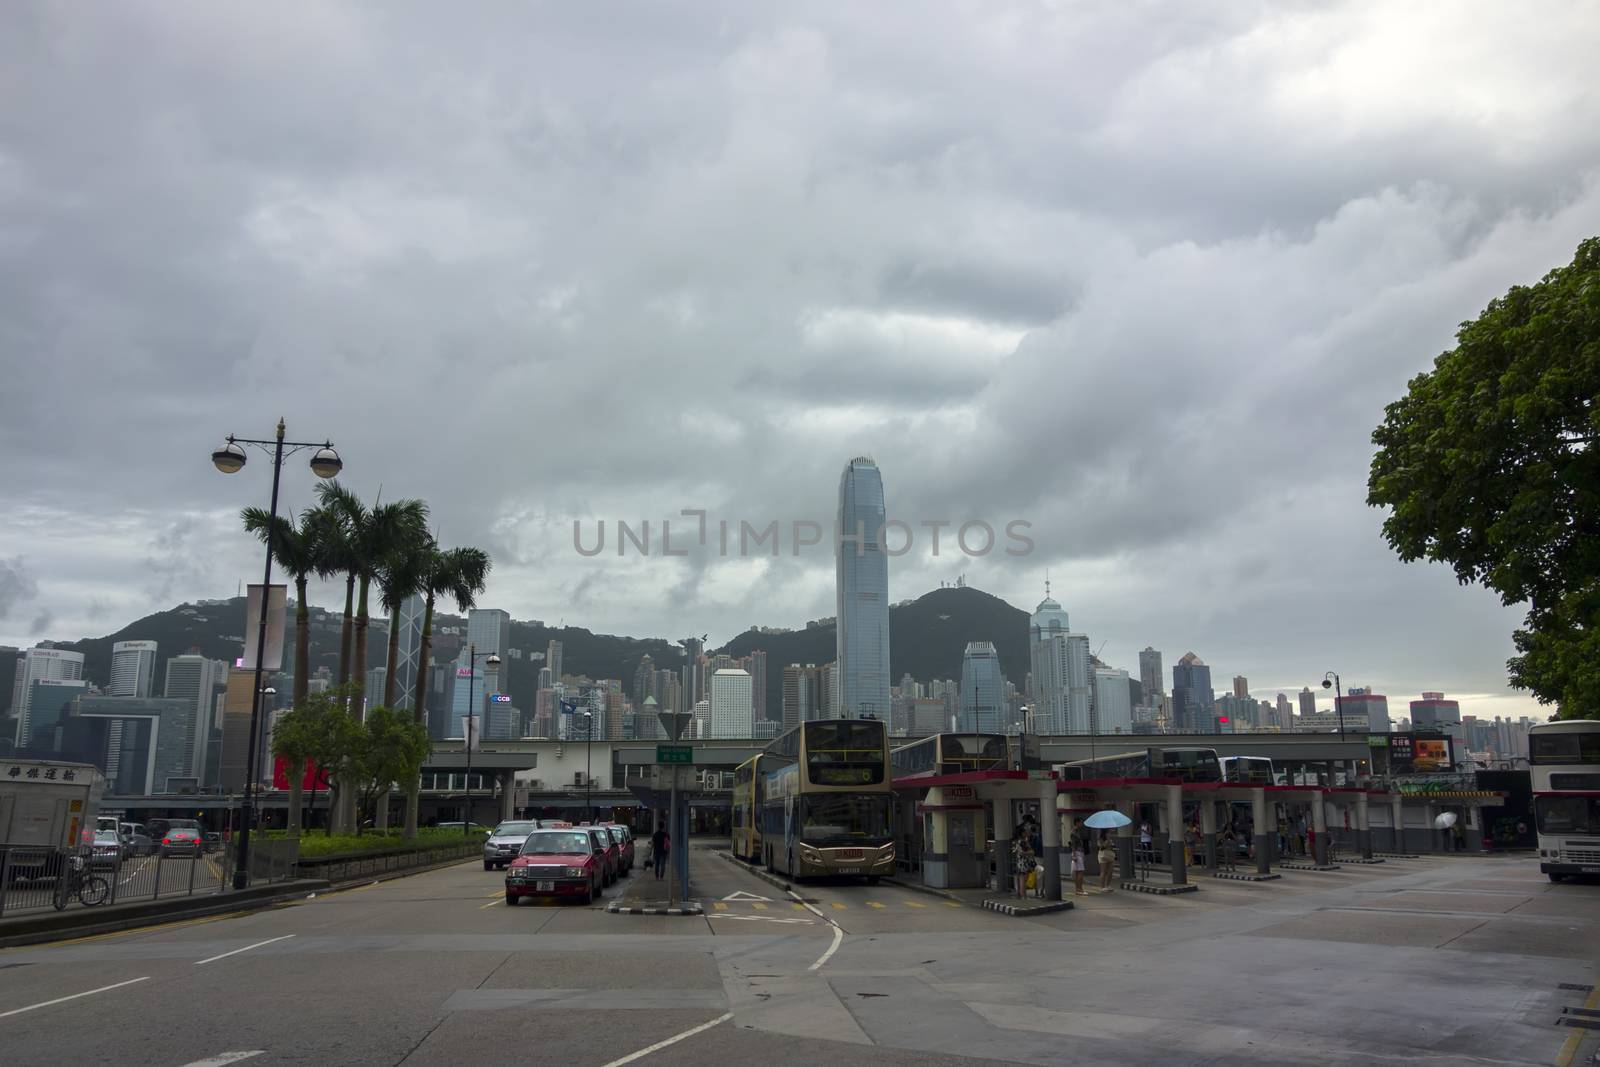 Star Ferry Pier Bus Terminal
Hong Kong Island in the Typhoon Rammasun  EDITORIAL China, Hong Kong 18.07.2014 